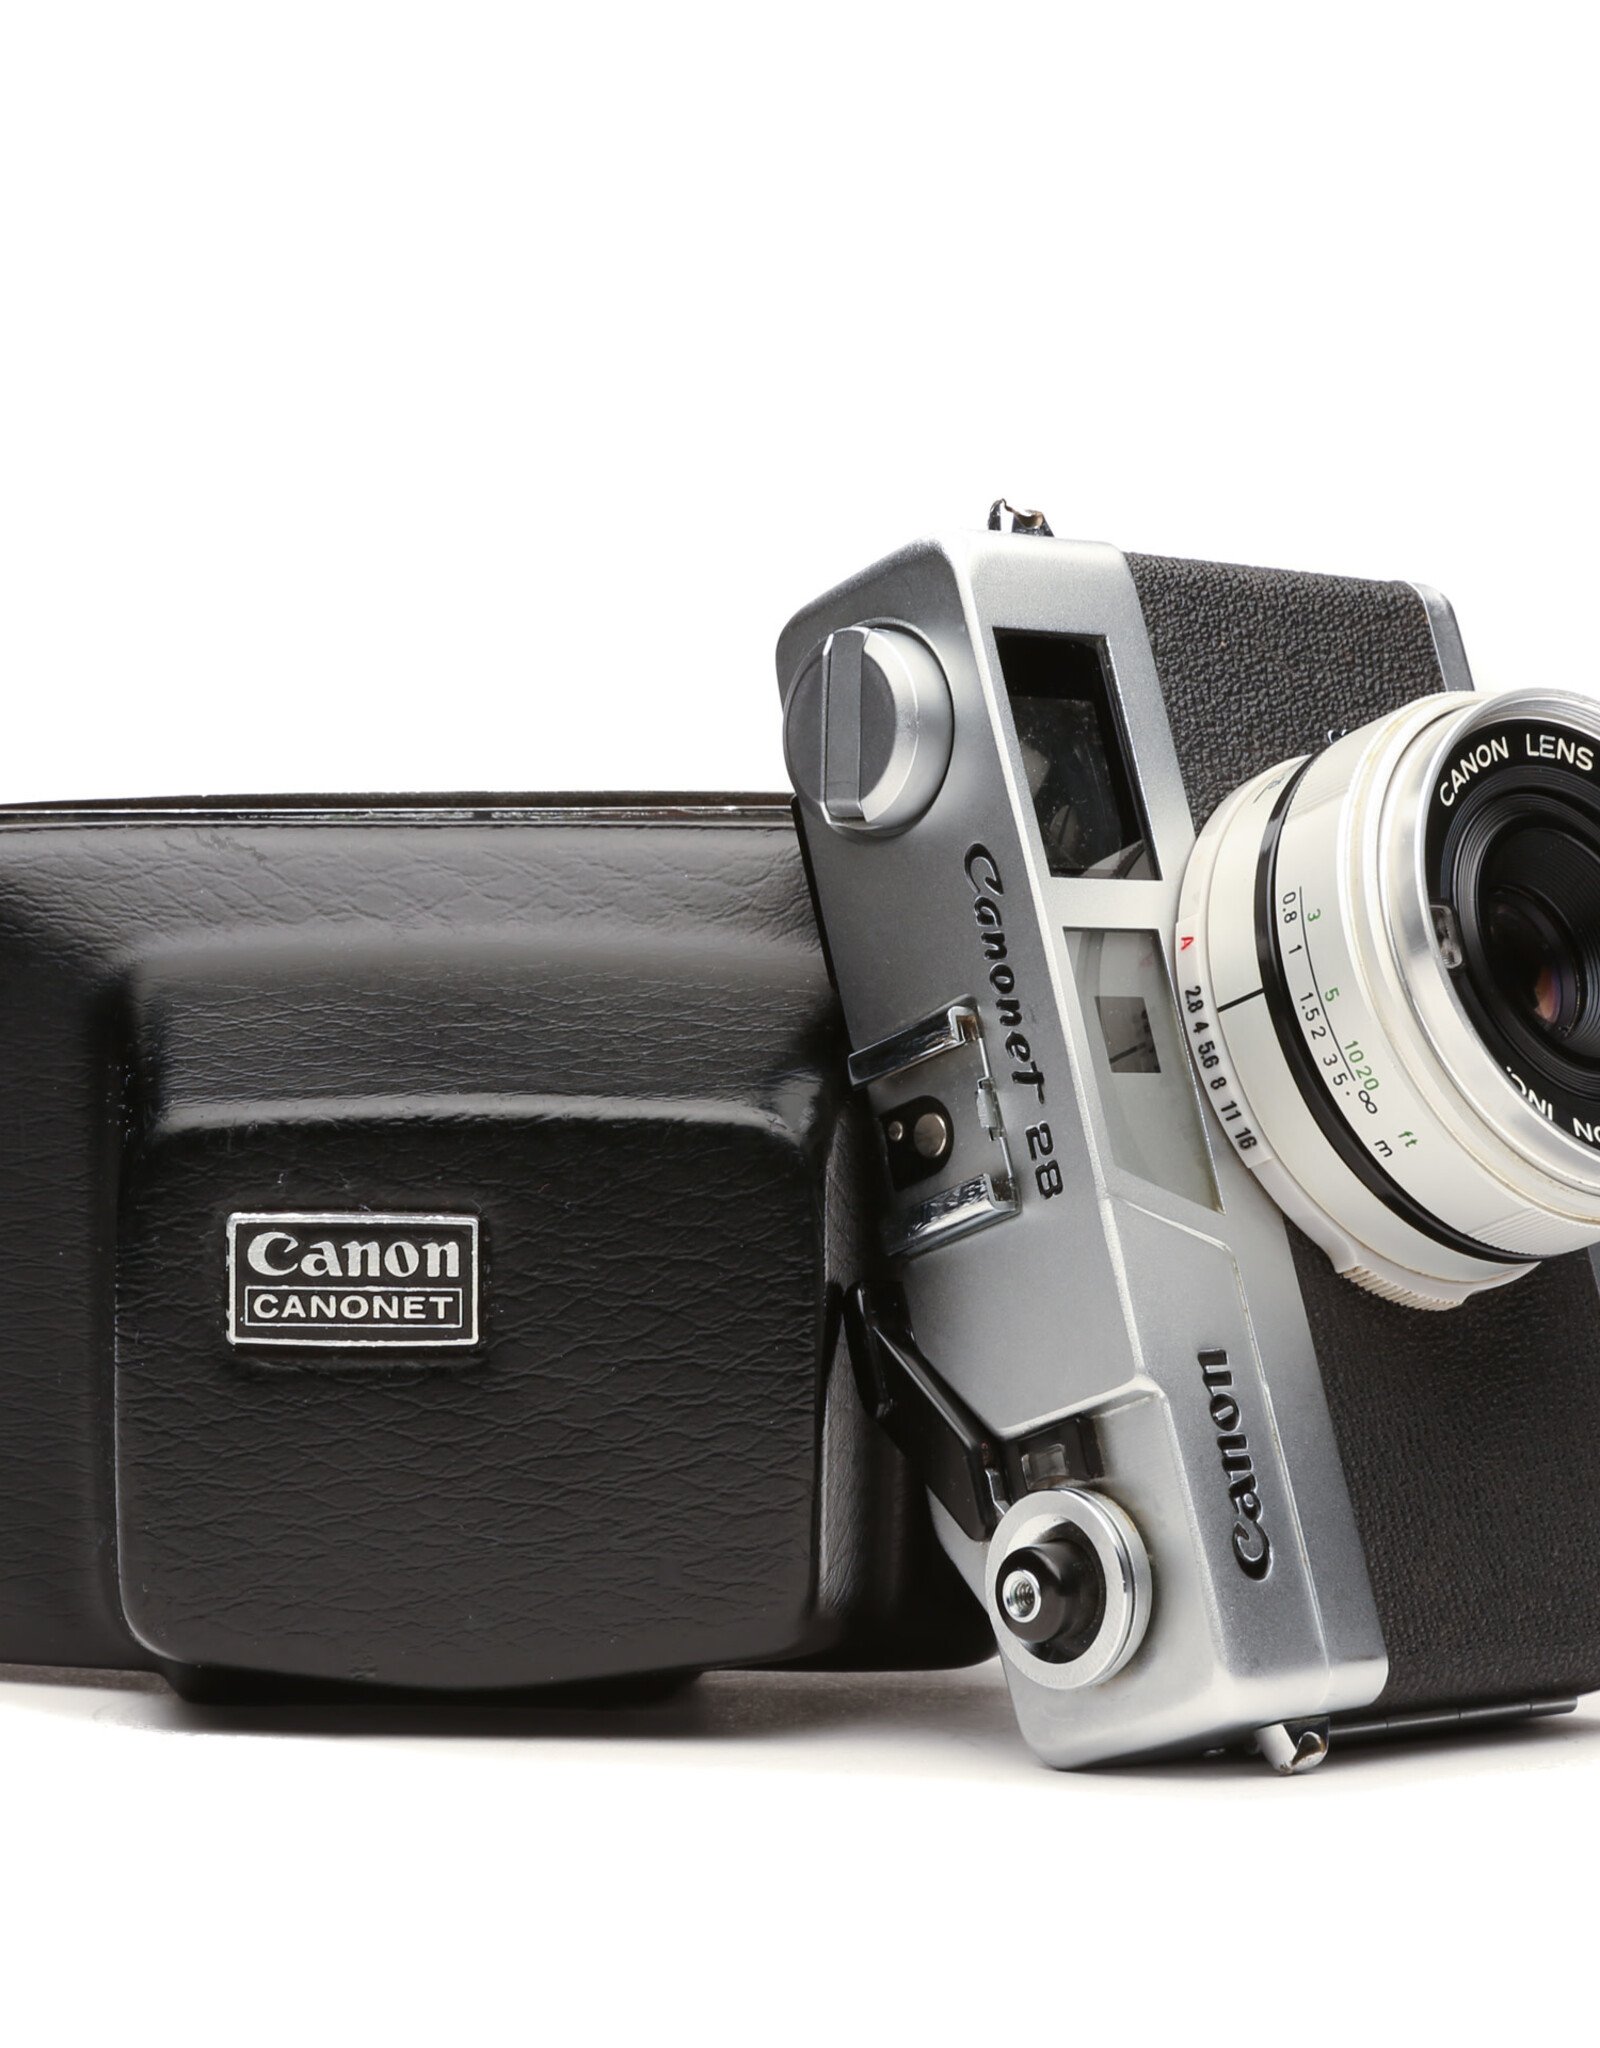 Canon Canon Canonet 28 35mm Rangefinder Camera